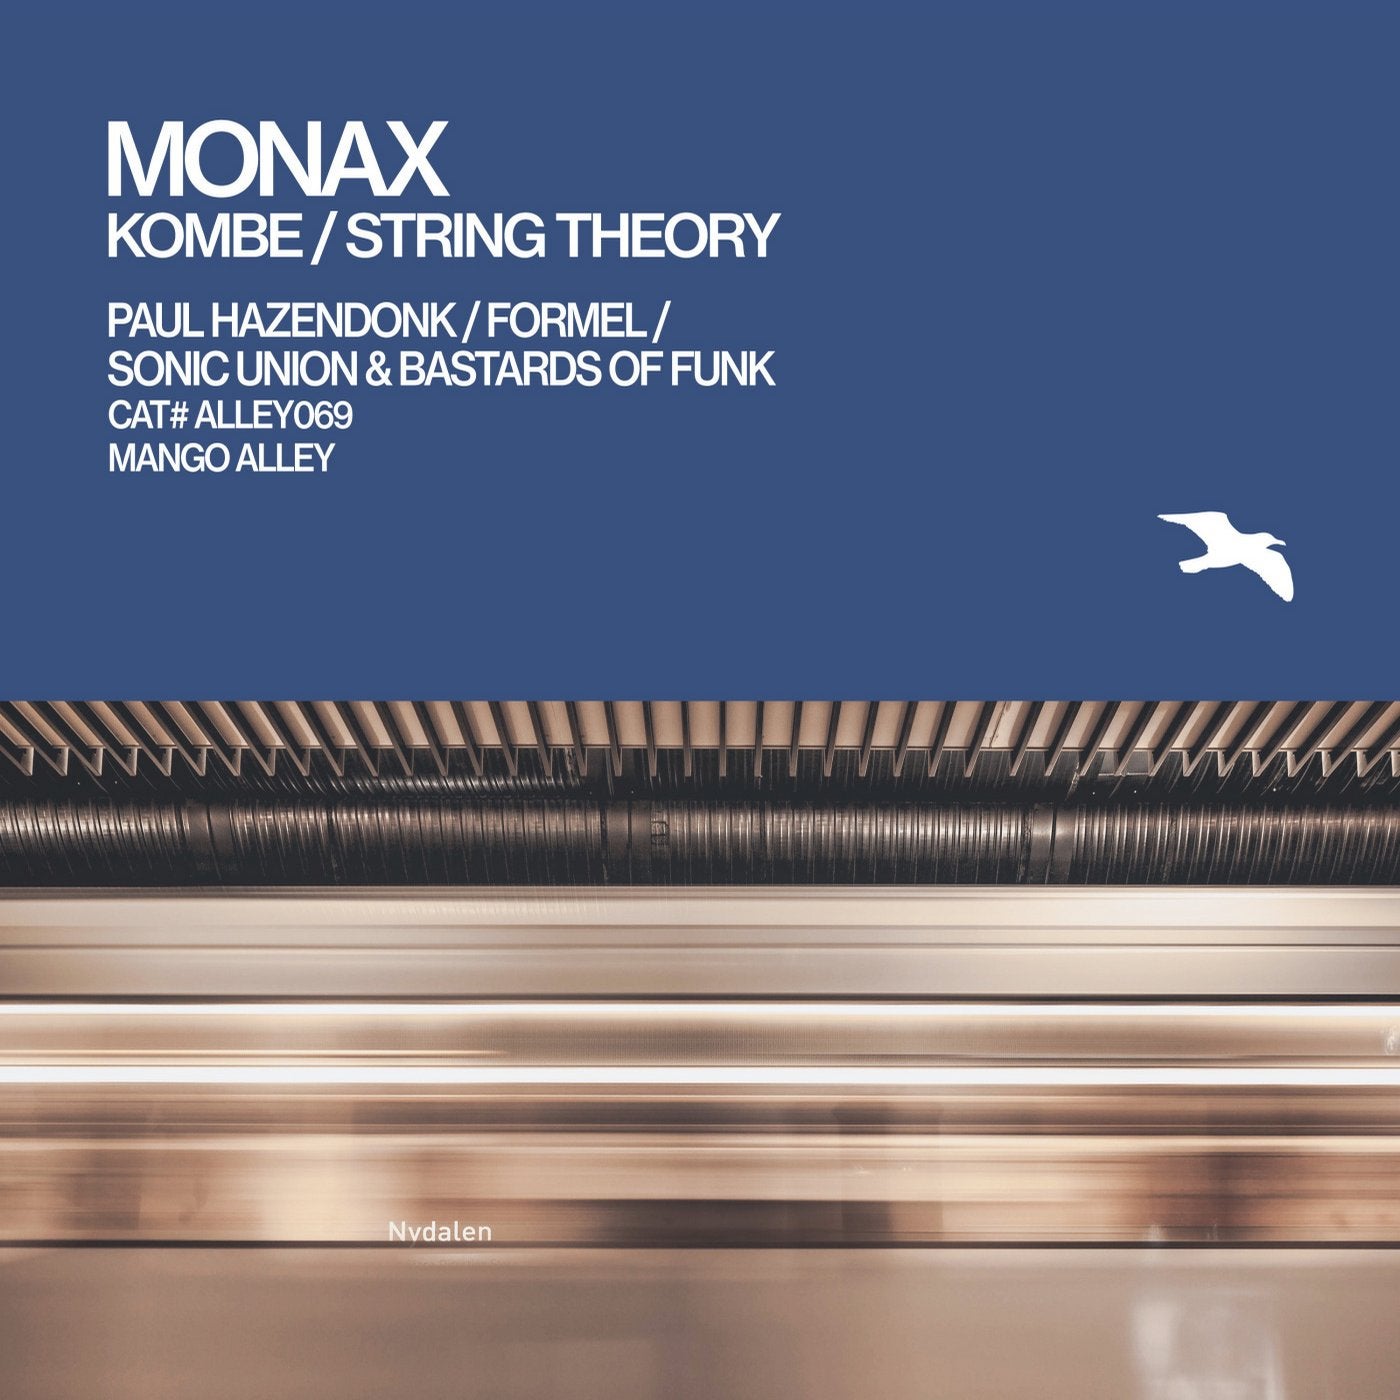 Kombe / String Theory